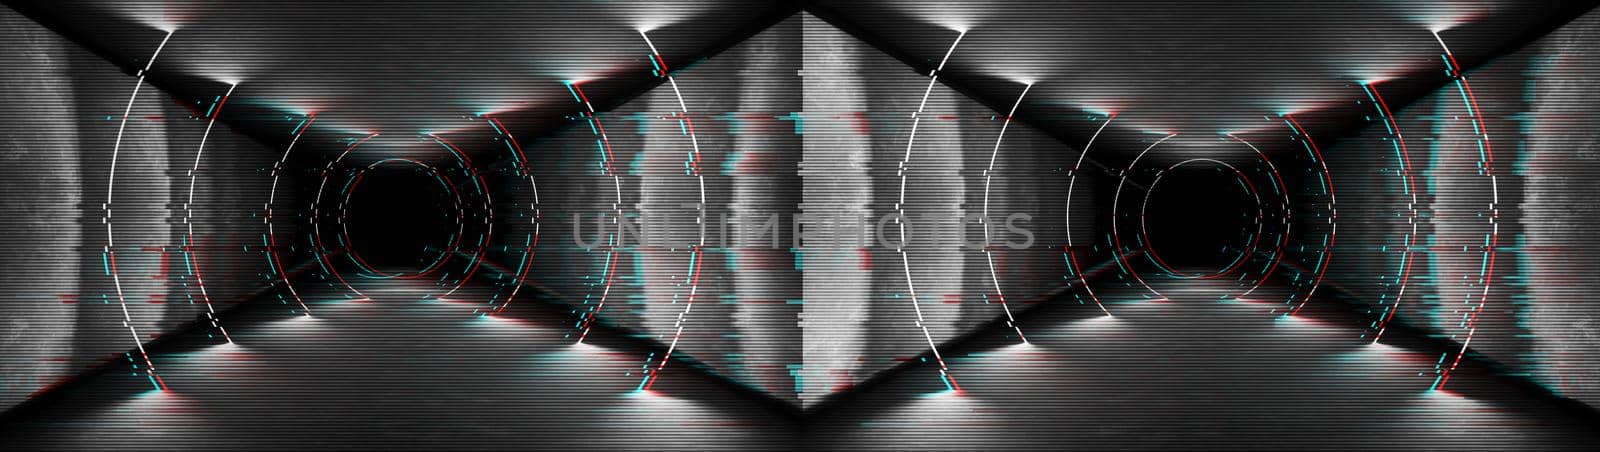 Analog static screen background. Abstract pixel noise glitch error video damage. Vhs glitch design. by DmytroRazinkov